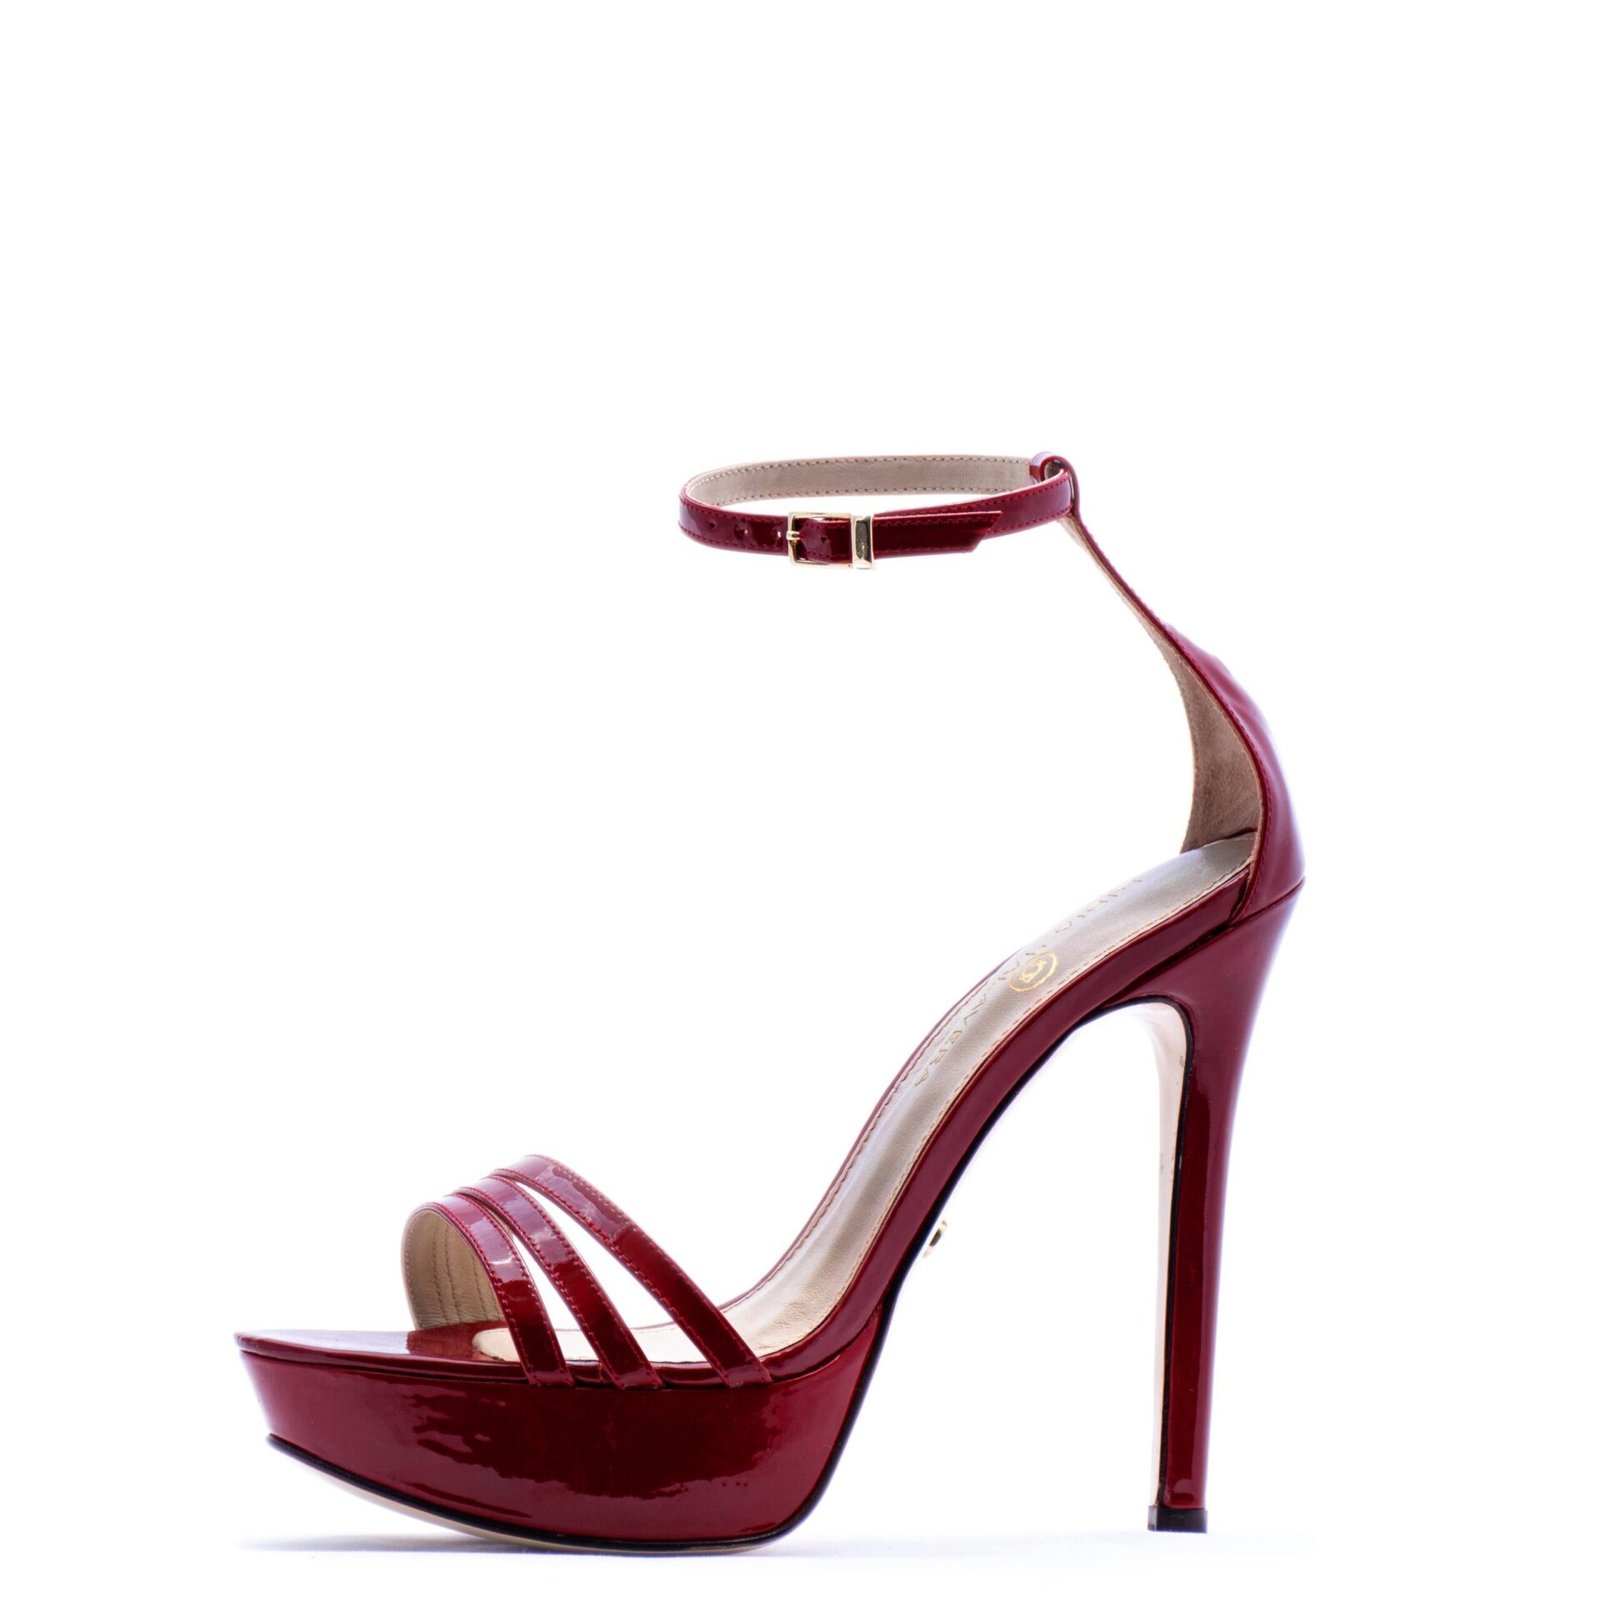 burgundy platform heels for men and women